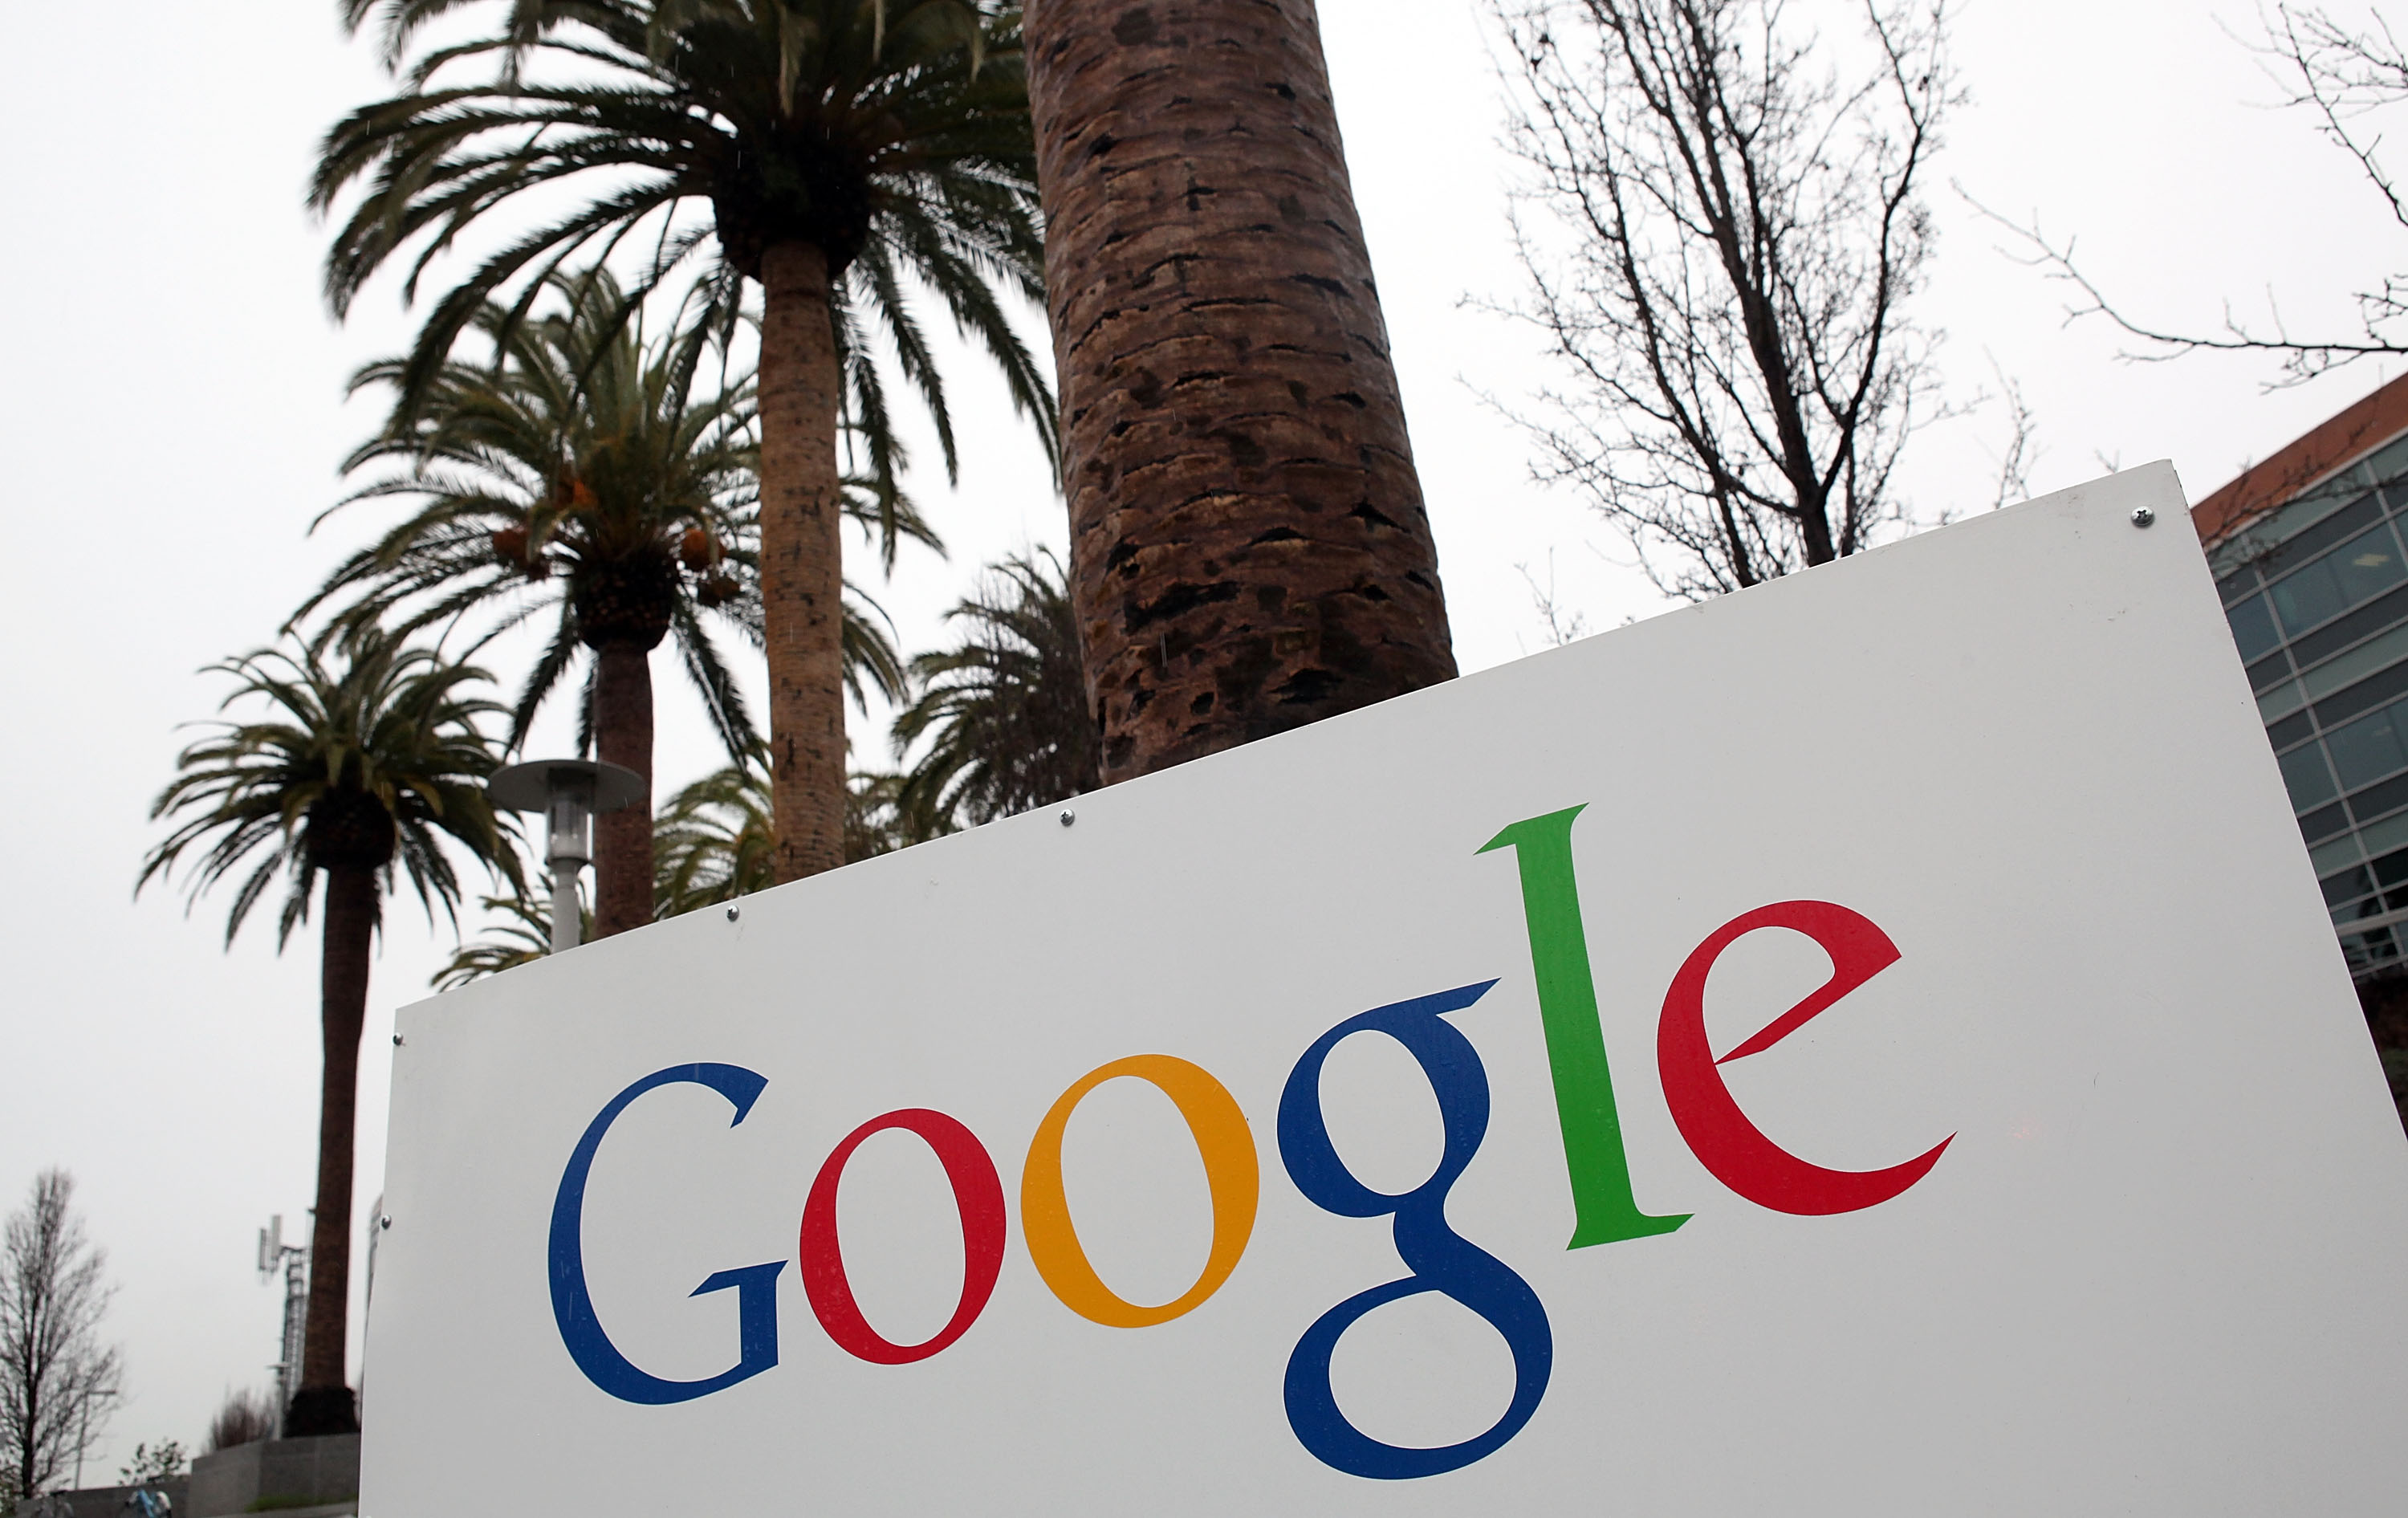 Google Announces Quarterly Earnings